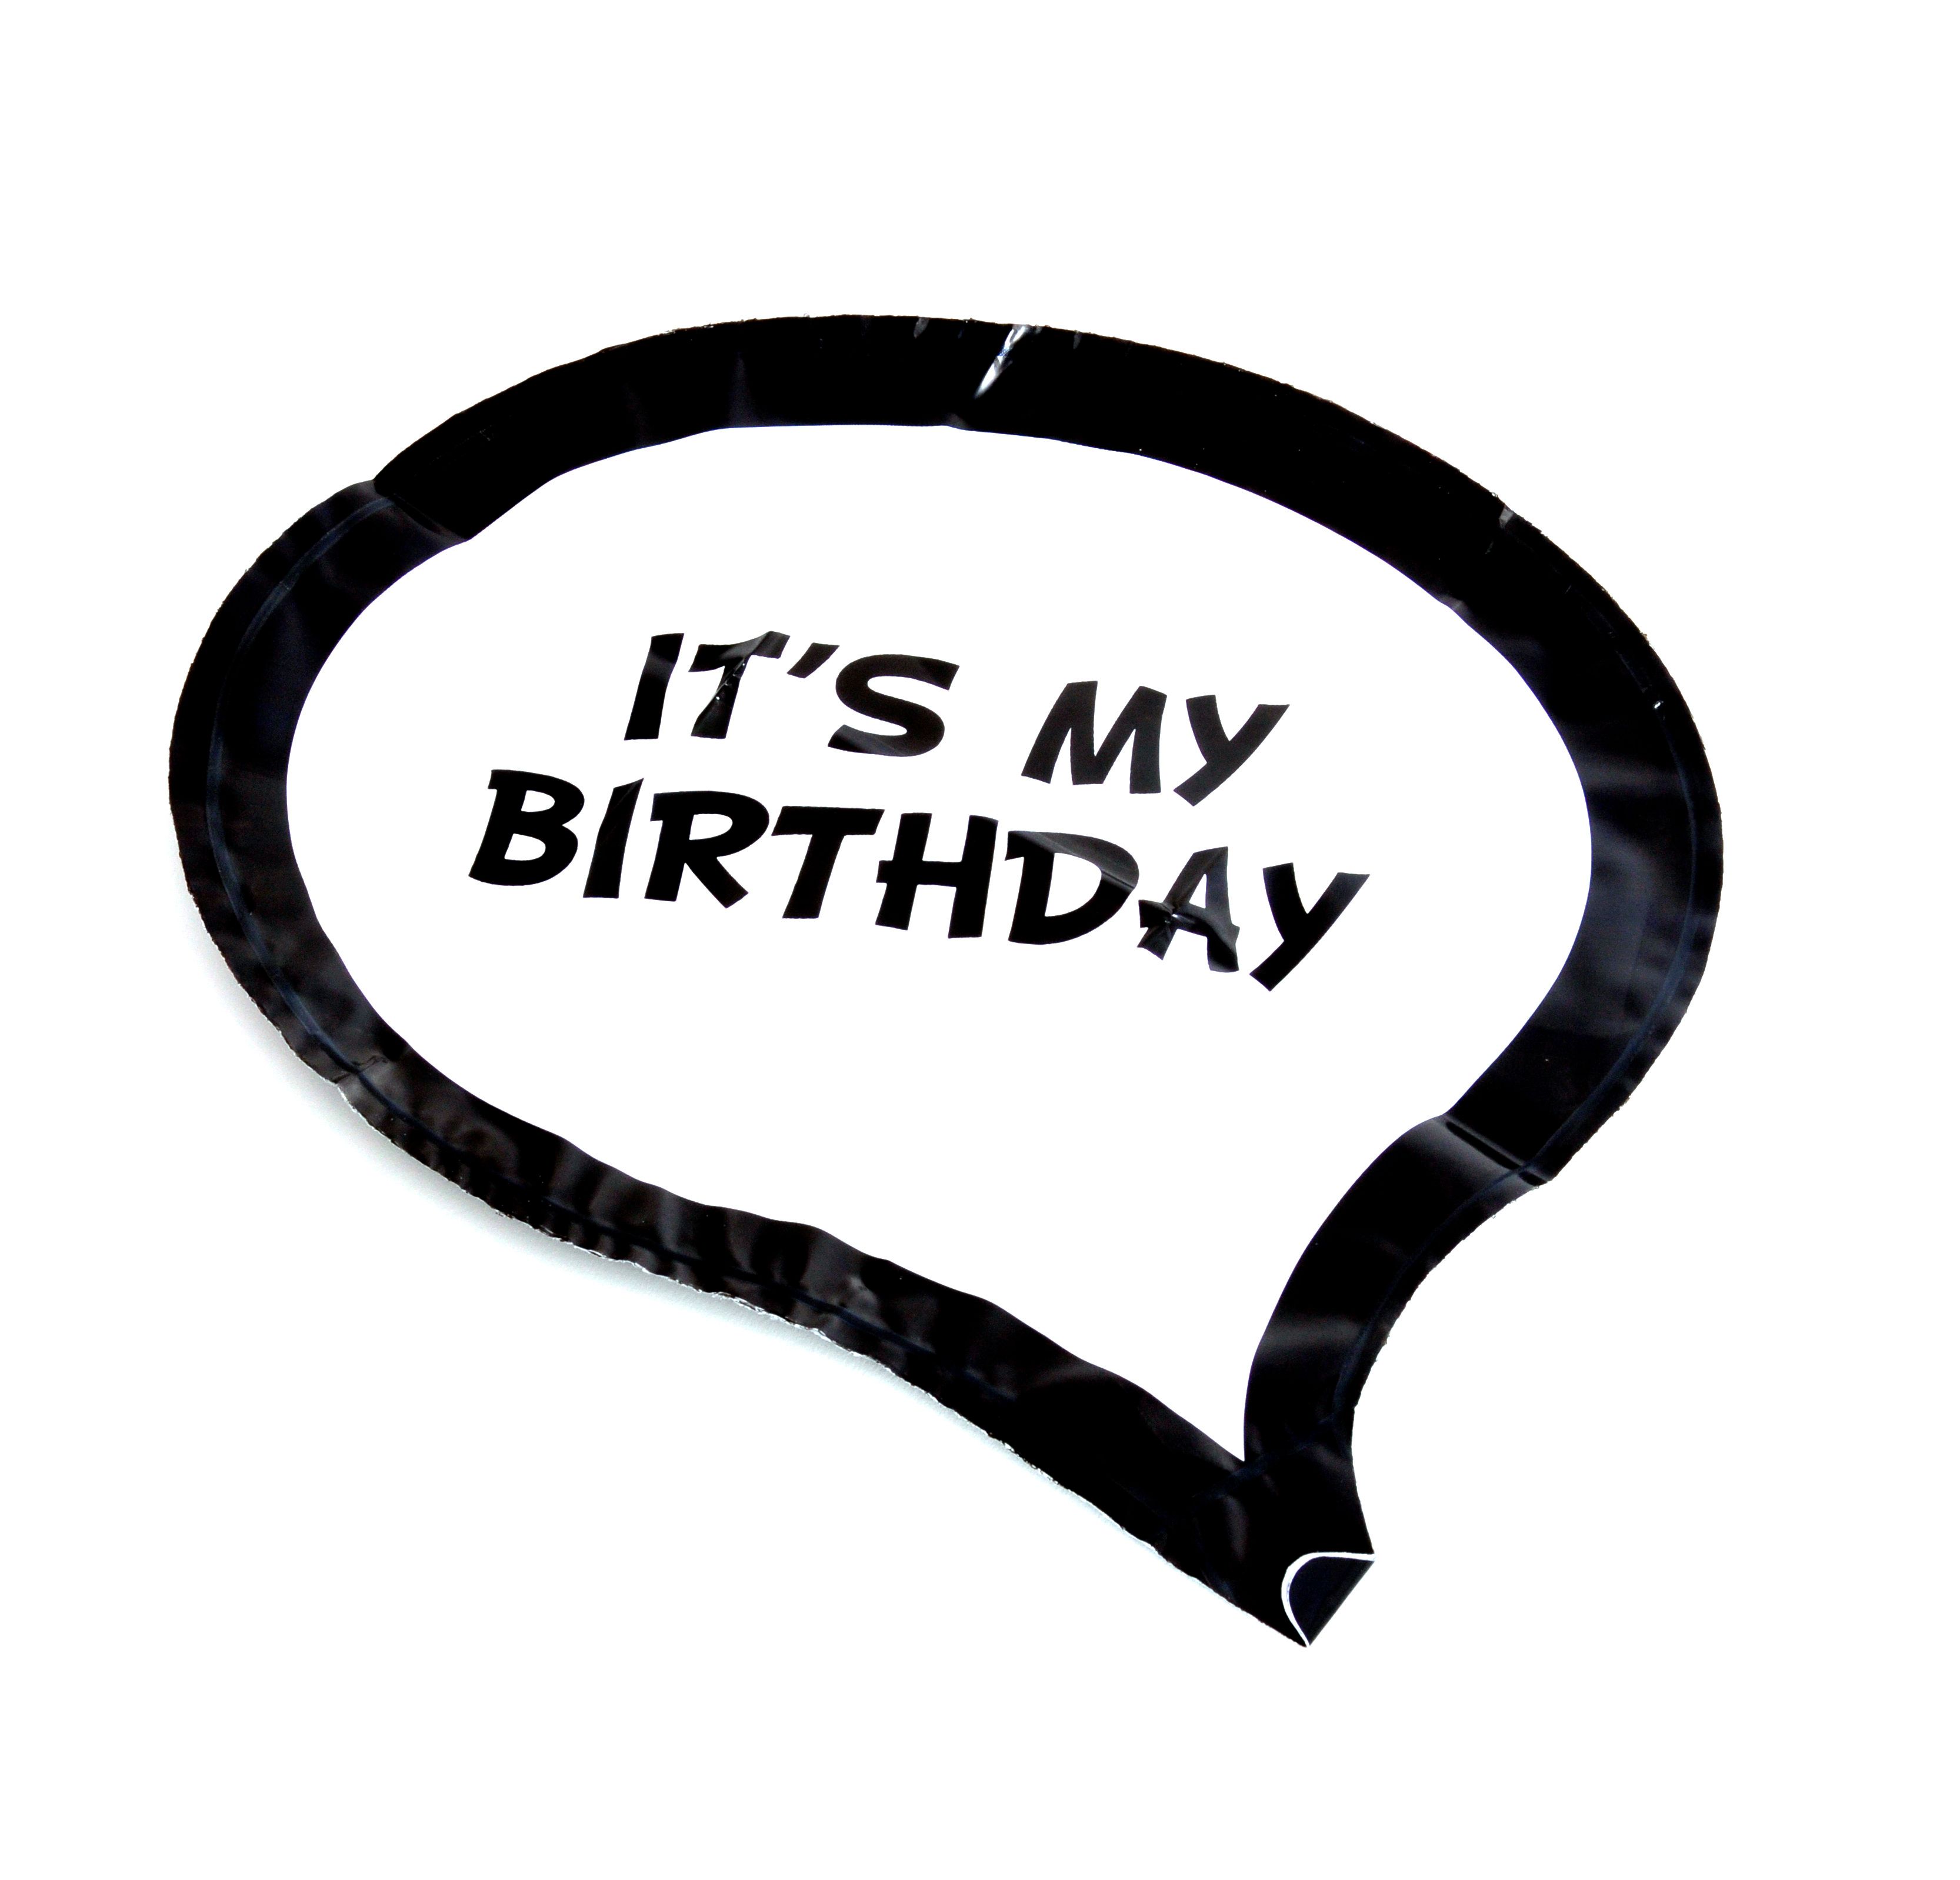 BIRTH027-it's-my-birthday-double-sided-balloon (2).JPG